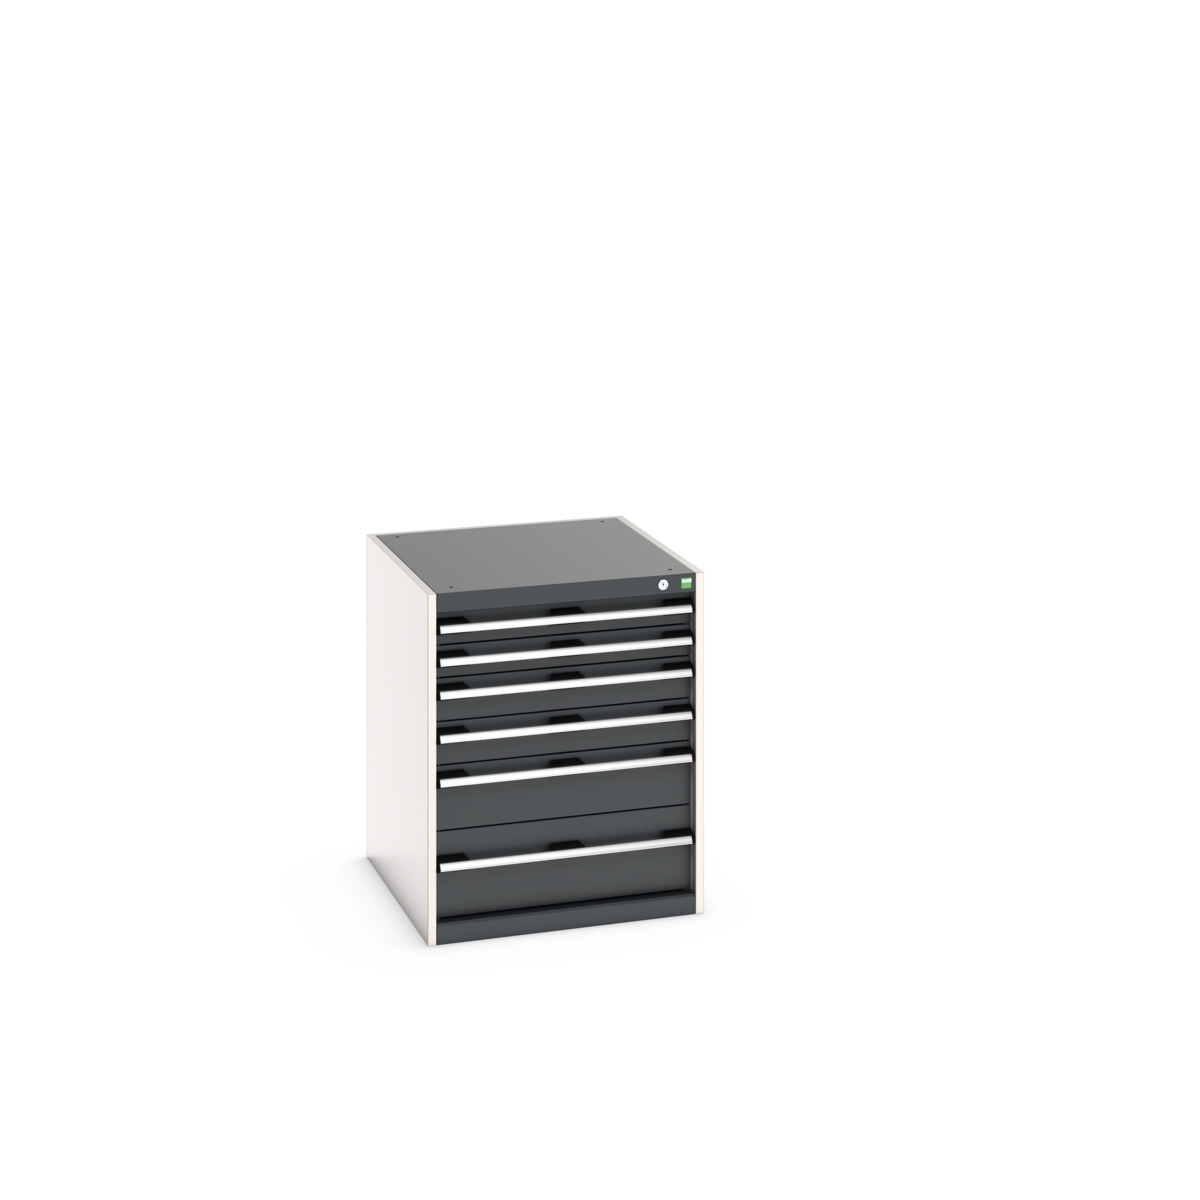 40027019. - cubio drawer cabinet